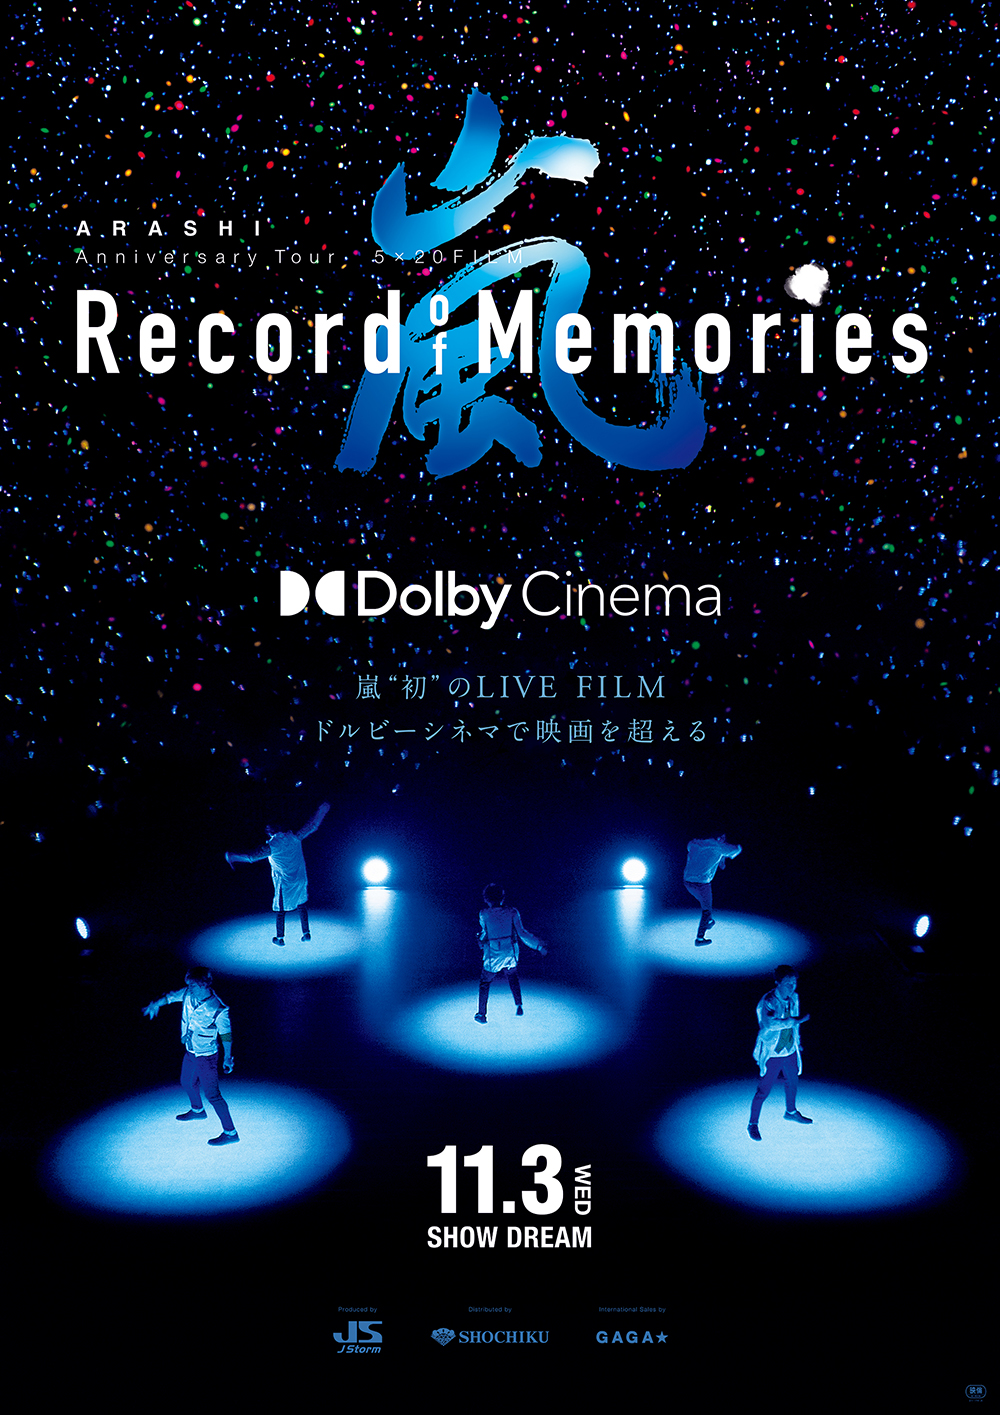 『ARASHI Anniversary Tour 5×20 FILM “Record of Memories”』が100万人動員目前の大ヒットを記録 - 画像一覧（2/2）